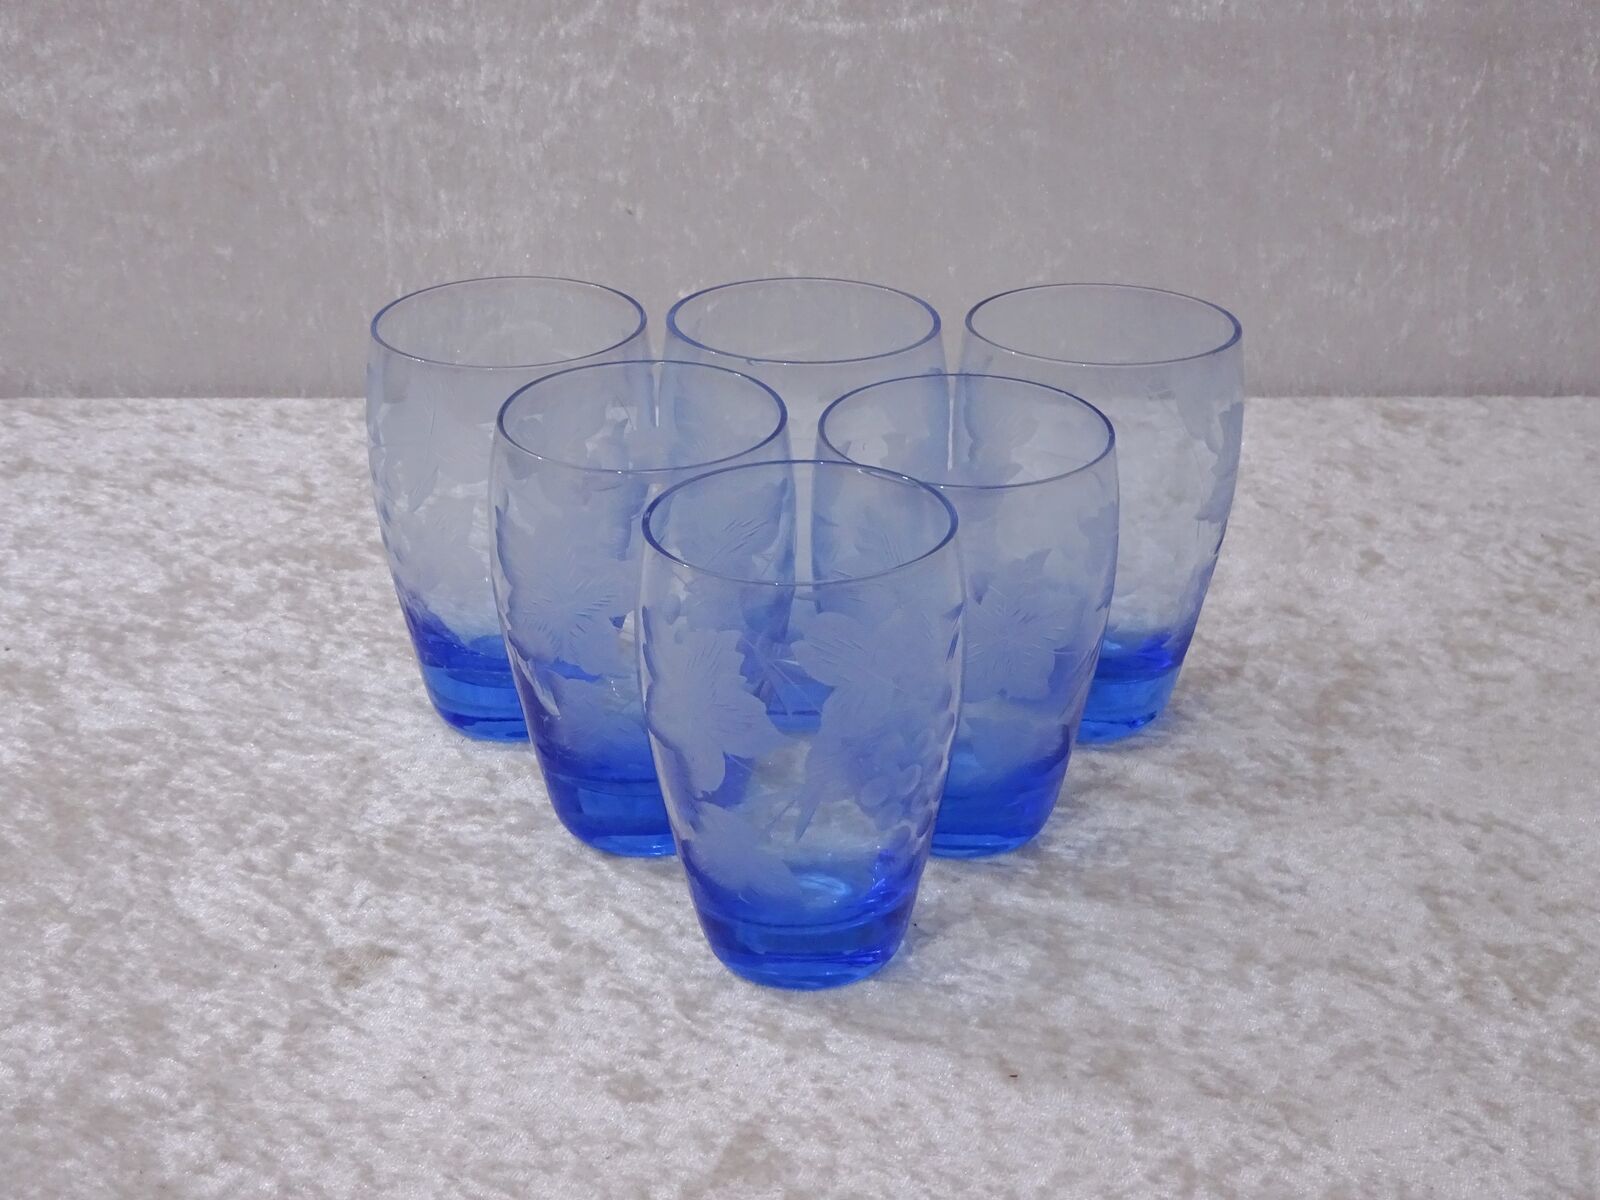 6 X Antique Art Nouveau Design Glass Vineyard Handmade Vintage circa 1900 - Blue